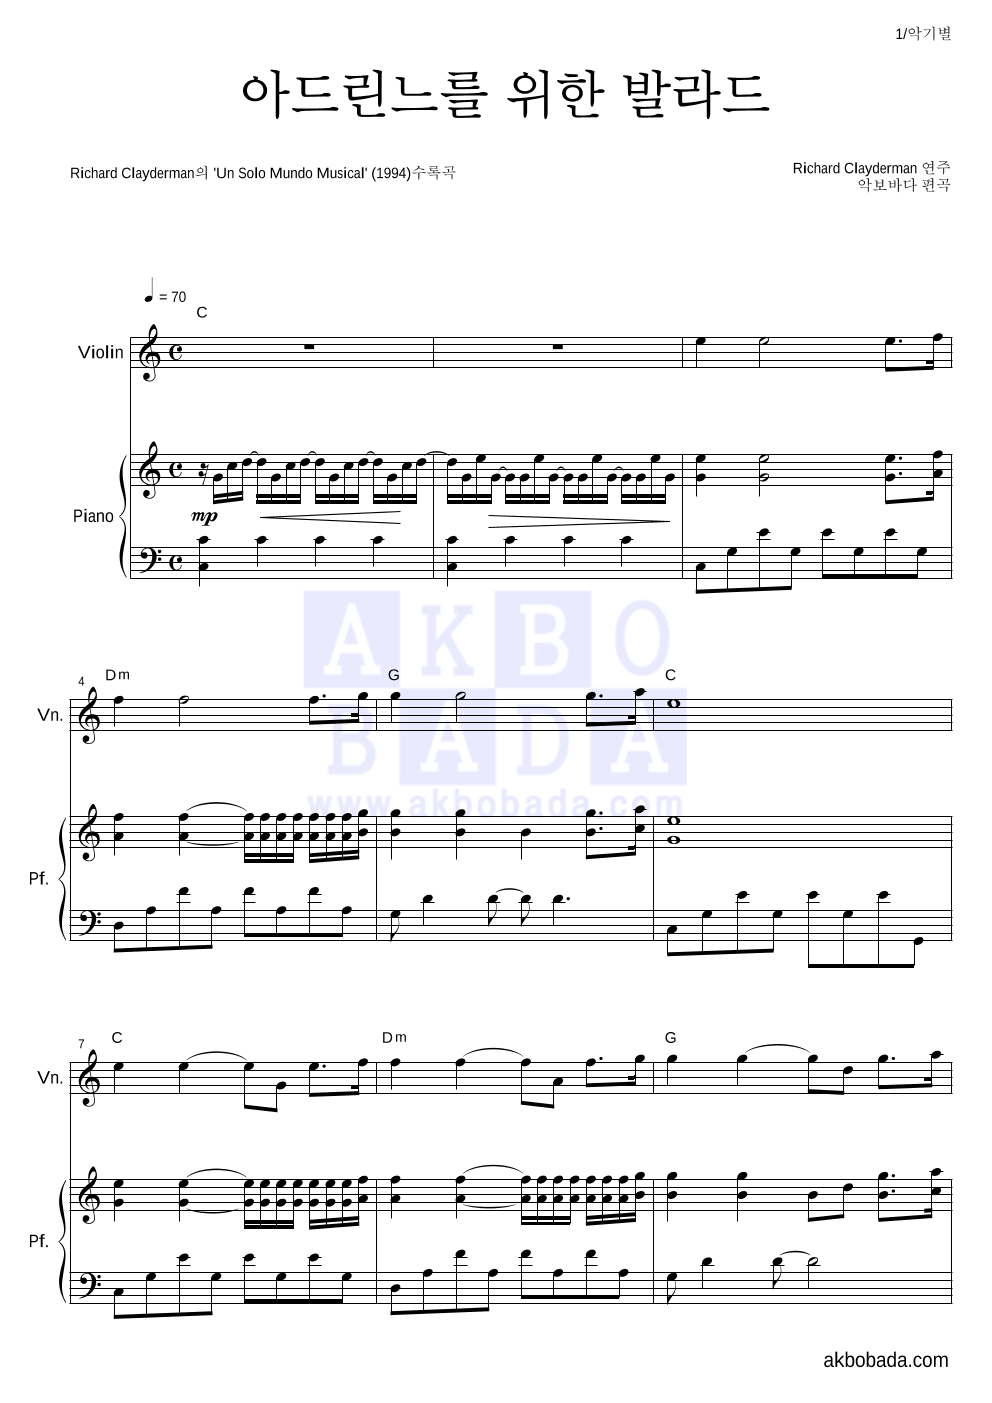 Richard Clayderman  - 아드린느를 위한 발라드 바이올린&피아노 악보 